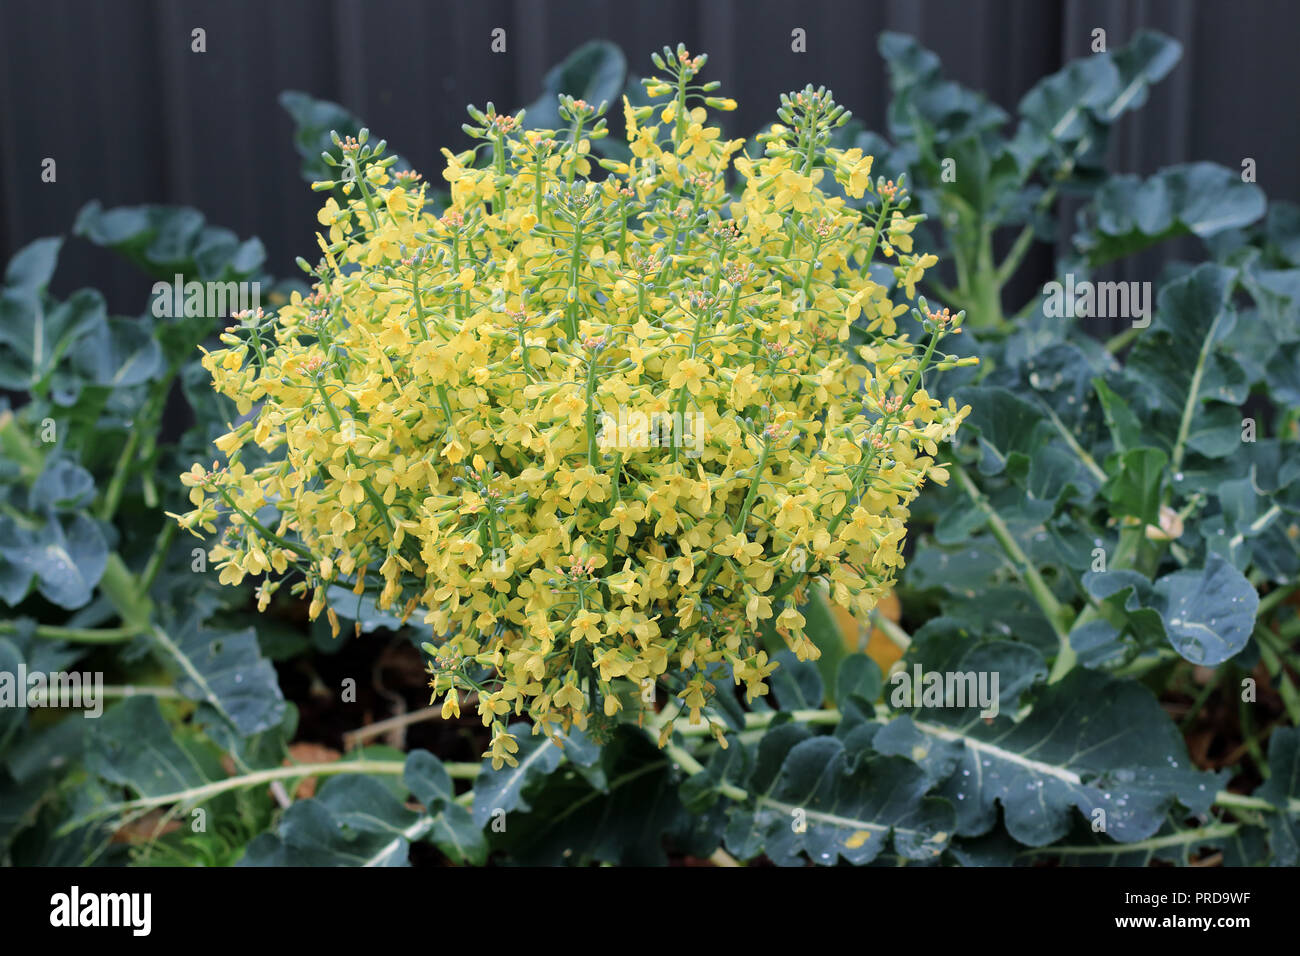 Broccoli flowers in full bloom Stock Photo